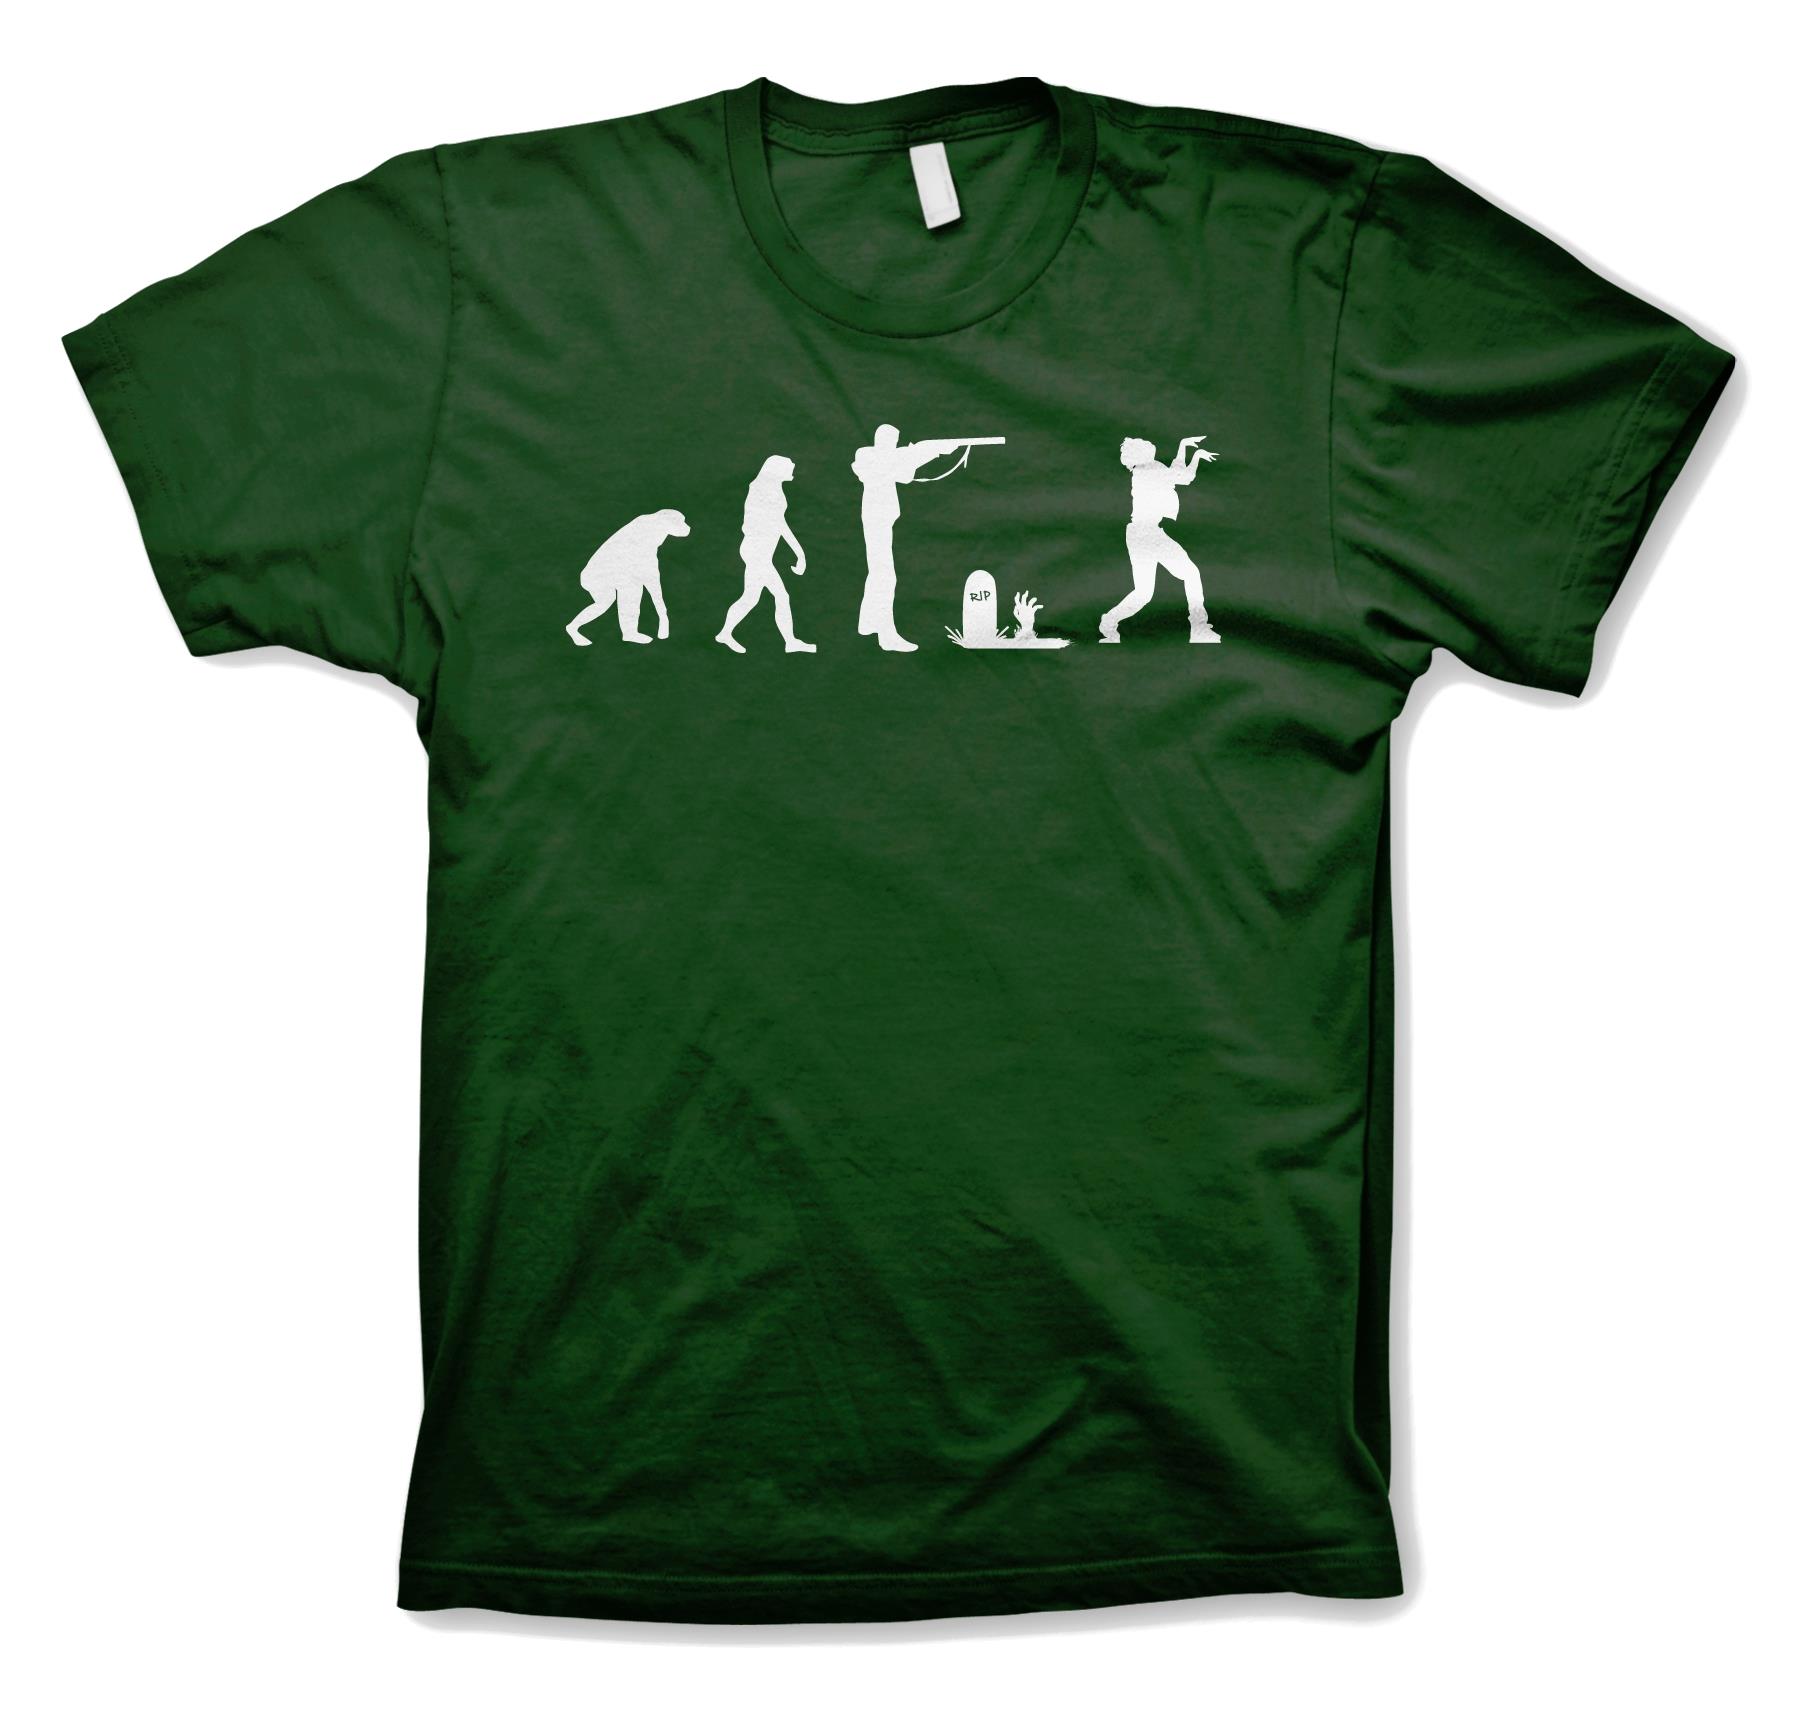 Zombie evolution T Shirt Funny Evolution of Man Walking Dead Shirt (Green) 2XL